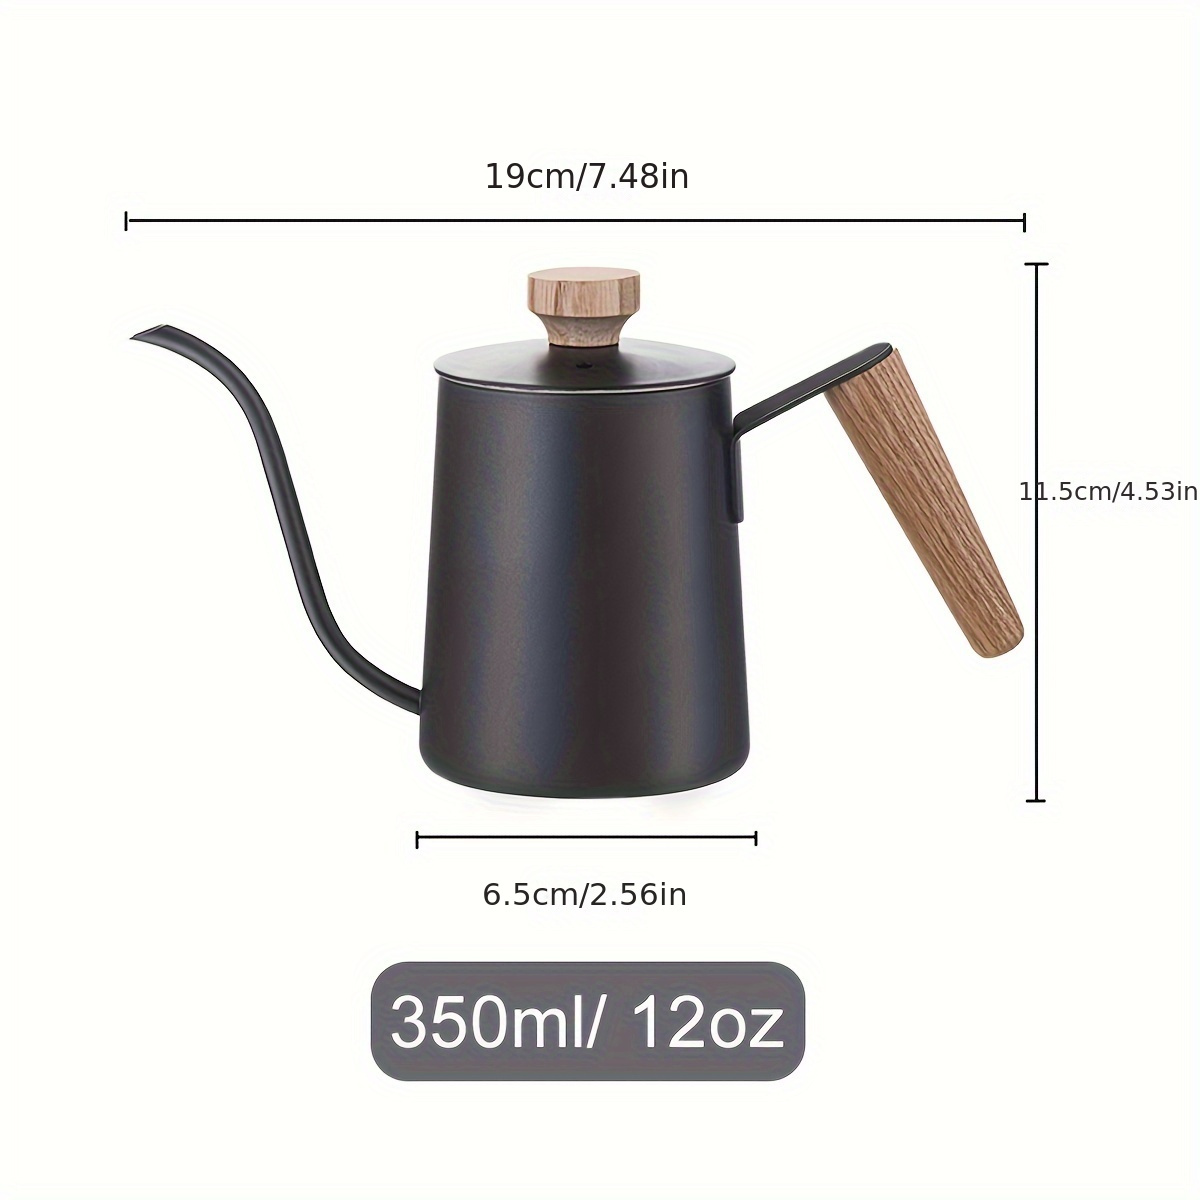 304 Tainless Steel Gooseneck Pour Over Coffee Maker, Mini Coffee